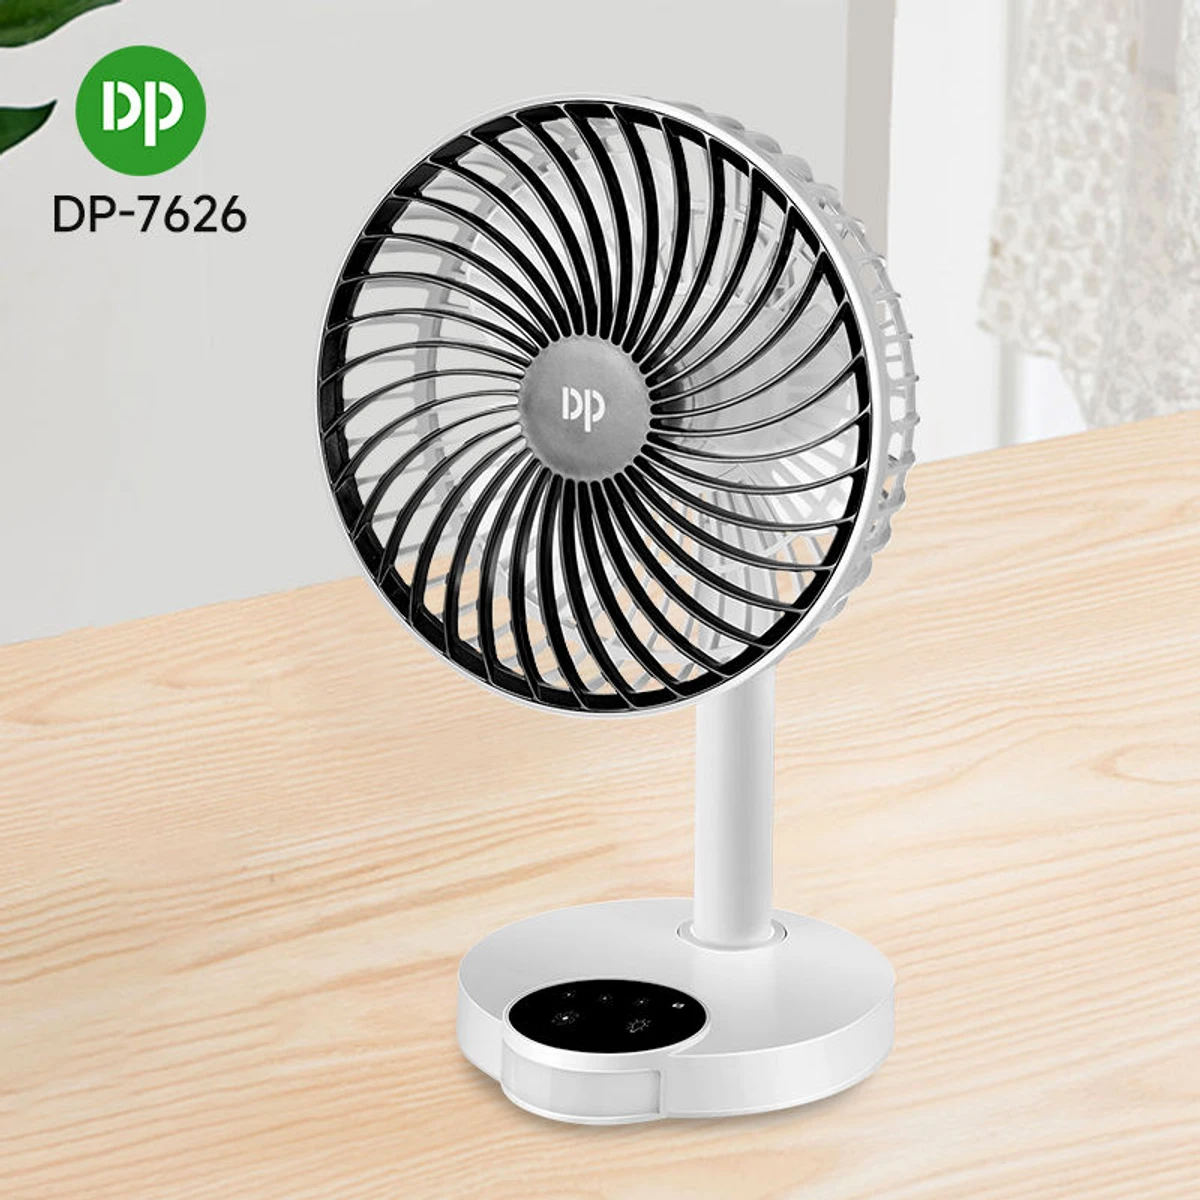 DP High Quality Usb Mini Portable Rechargeable Table Desk Fan – DP 7626